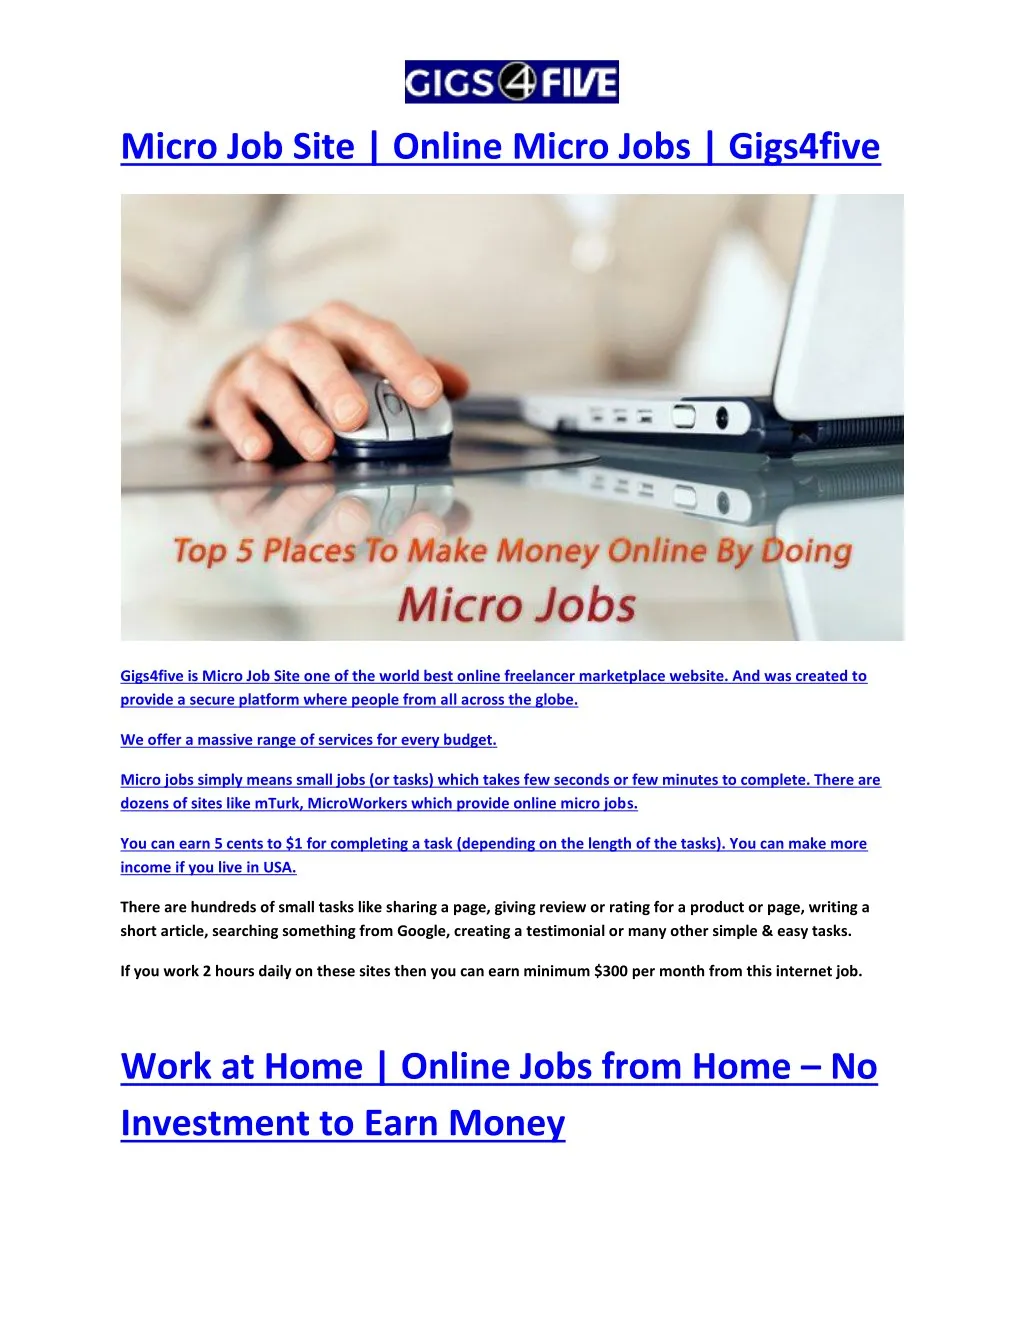 micro job site online micro jobs gigs4five